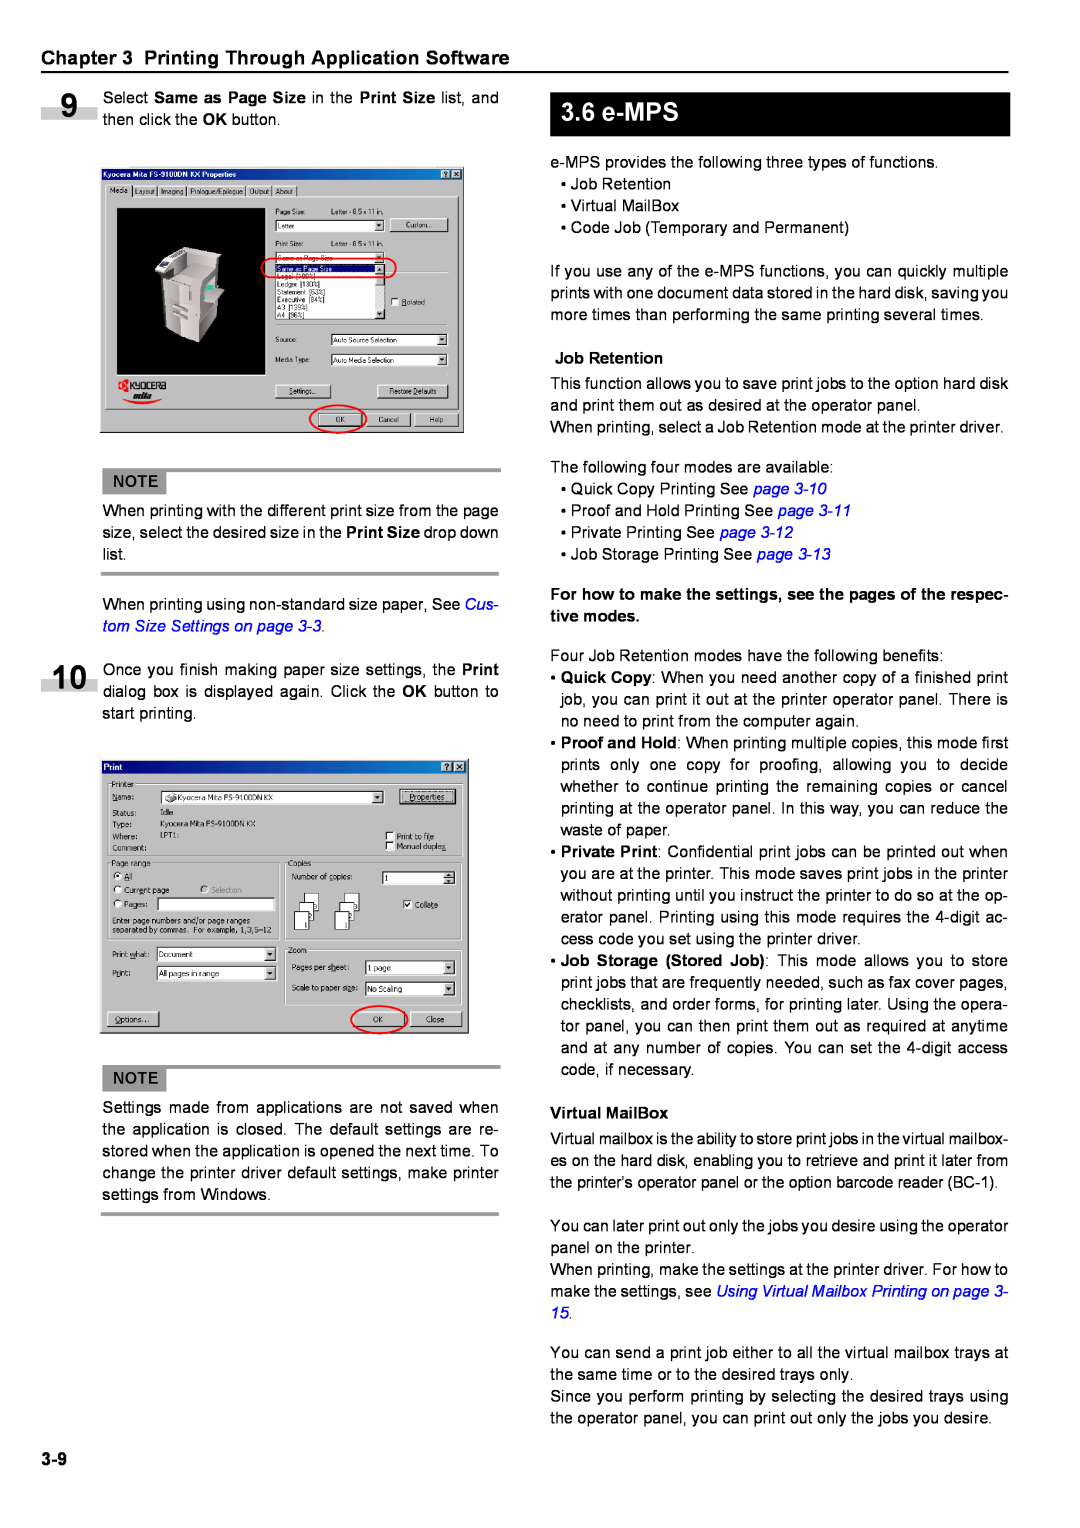 Kyocera S-9100DN manual e-MPS, Printing Through Application Software, Job Retention, Virtual MailBox 